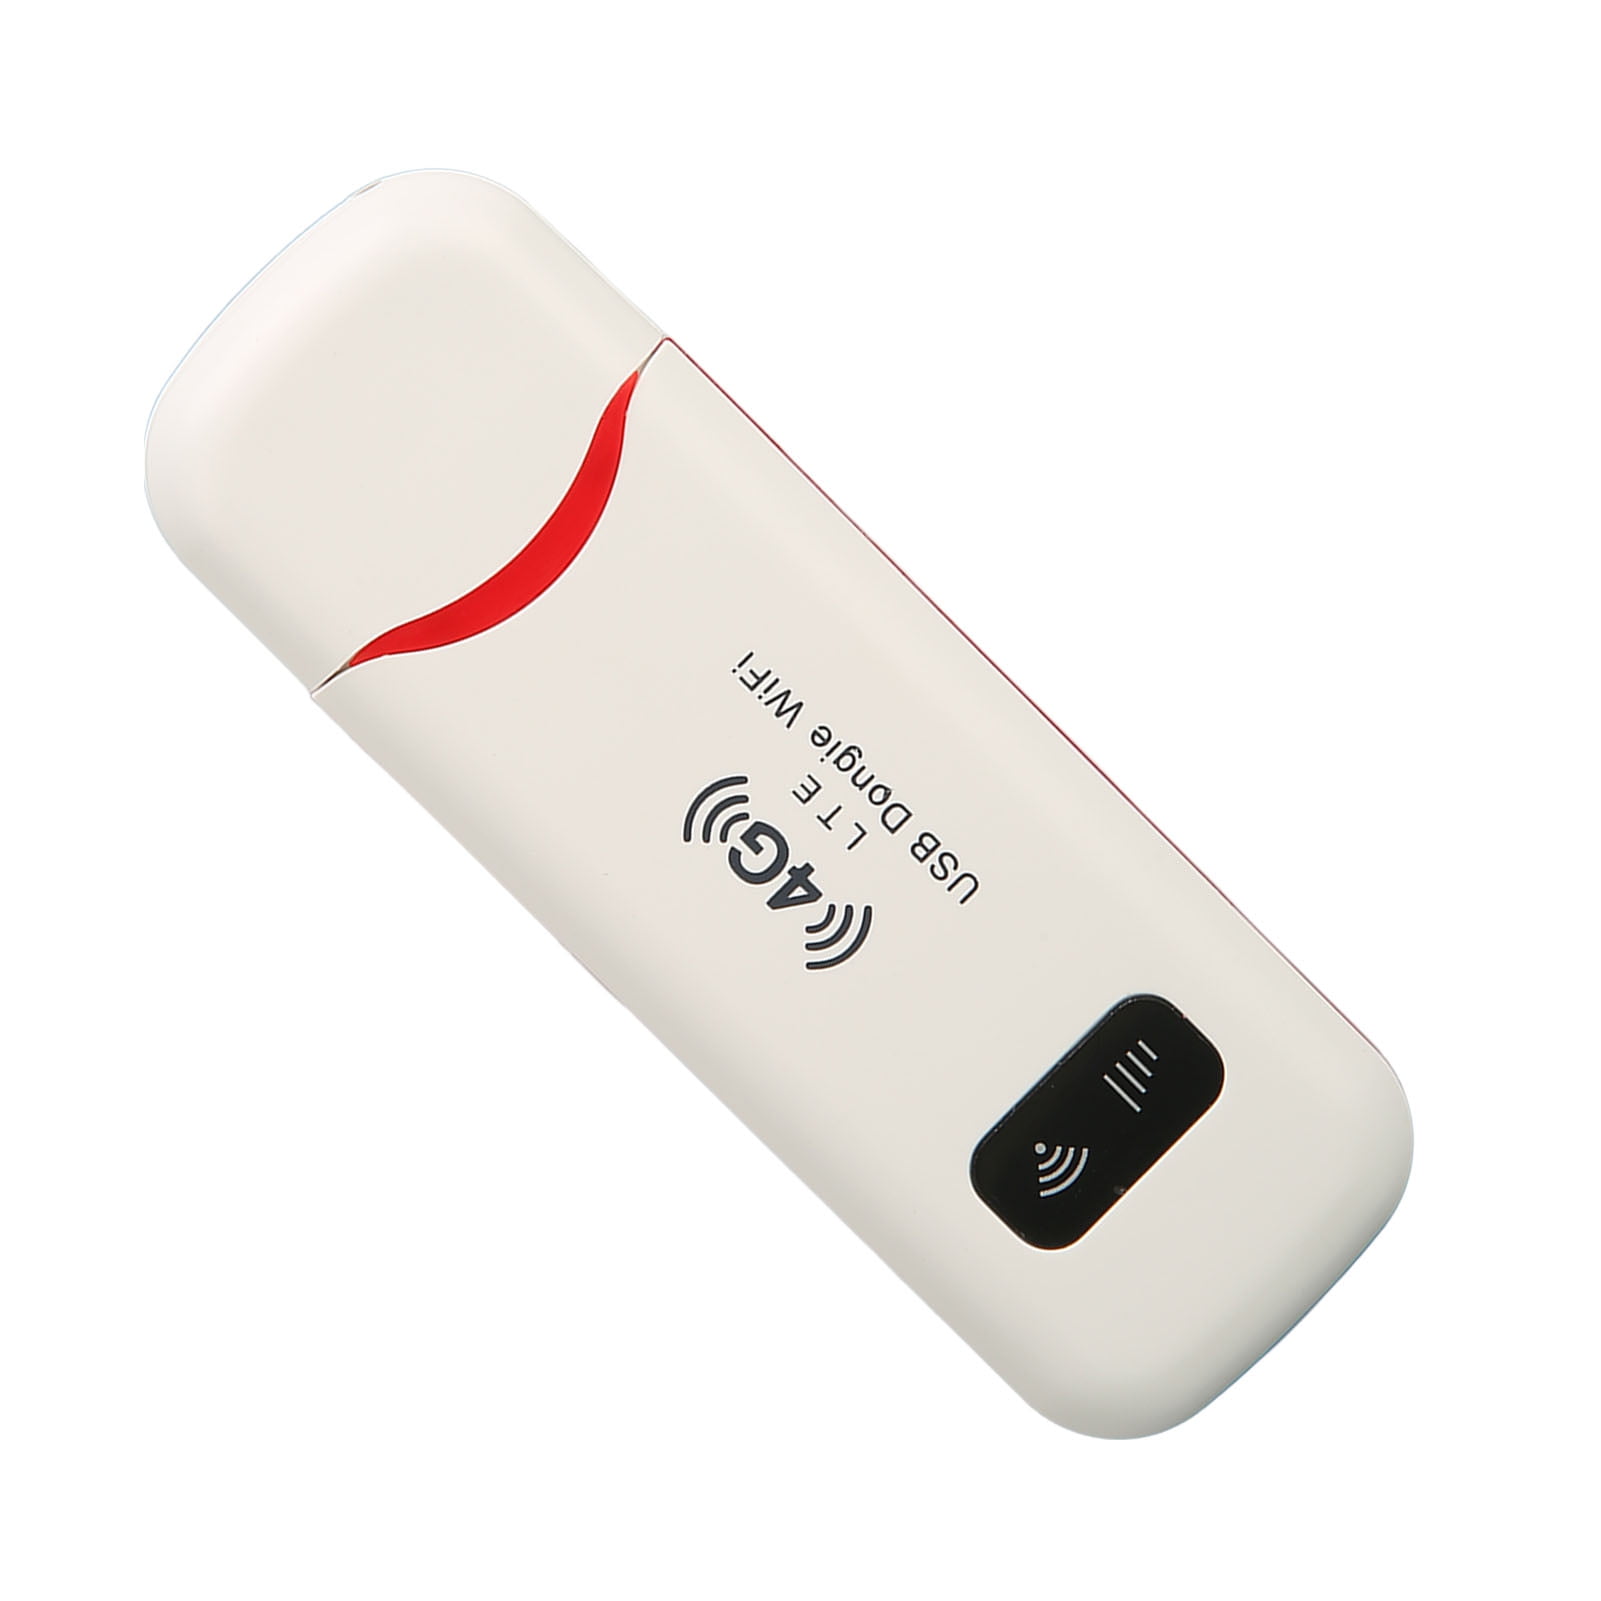 4G LTE USB Travel WiFi Router, Portable Pocket Mobile Hotspot